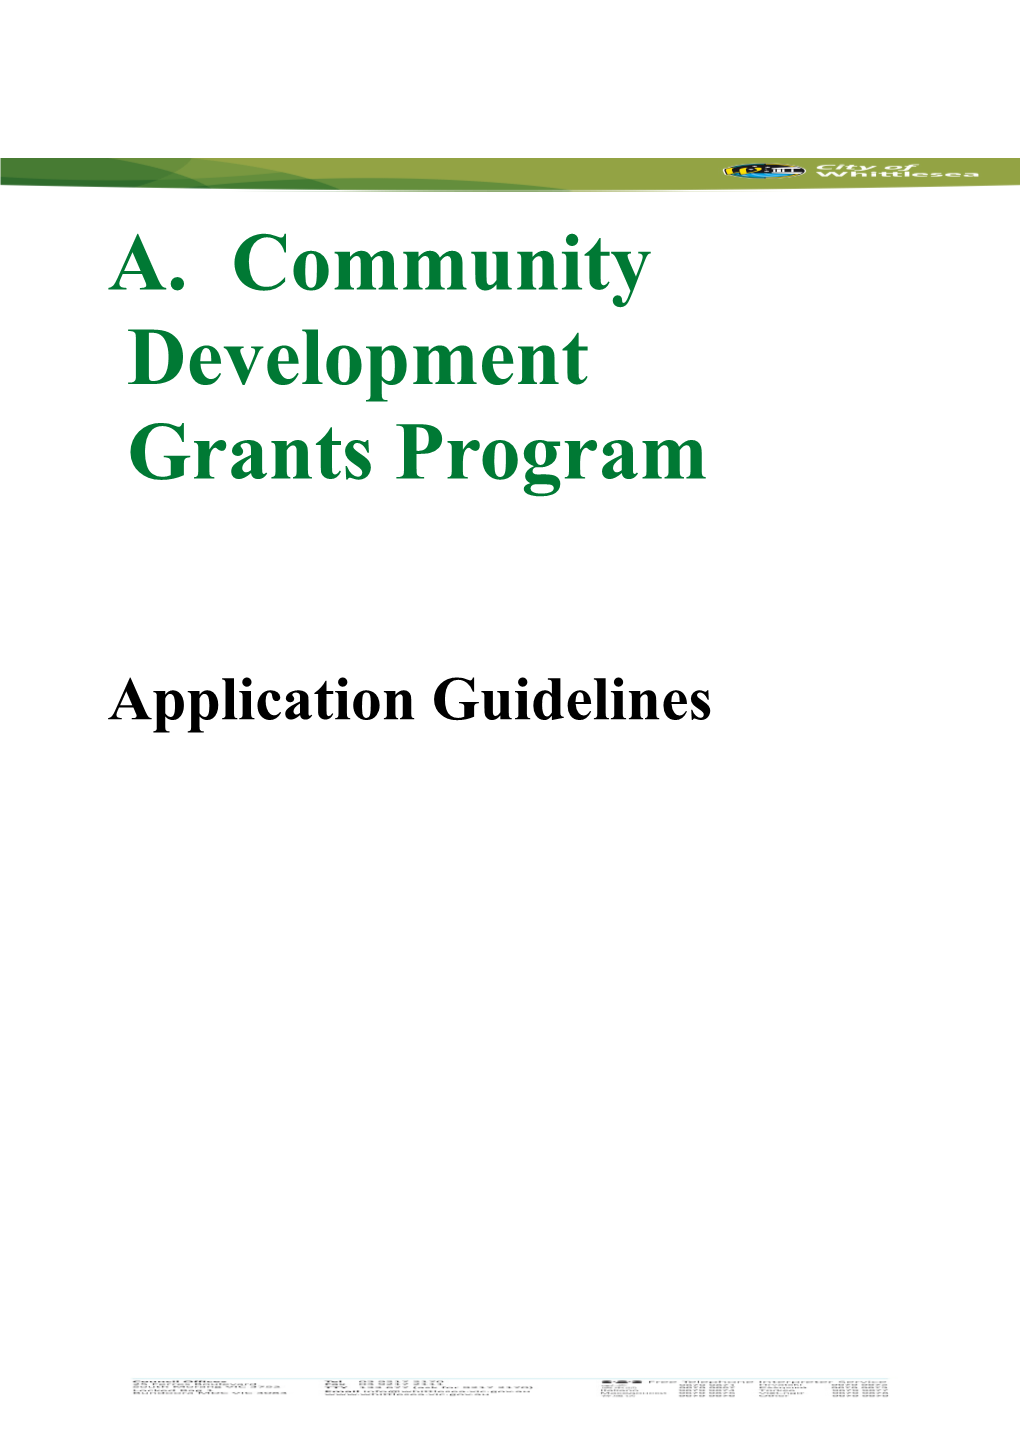 Community Development Grants Application Guidelines